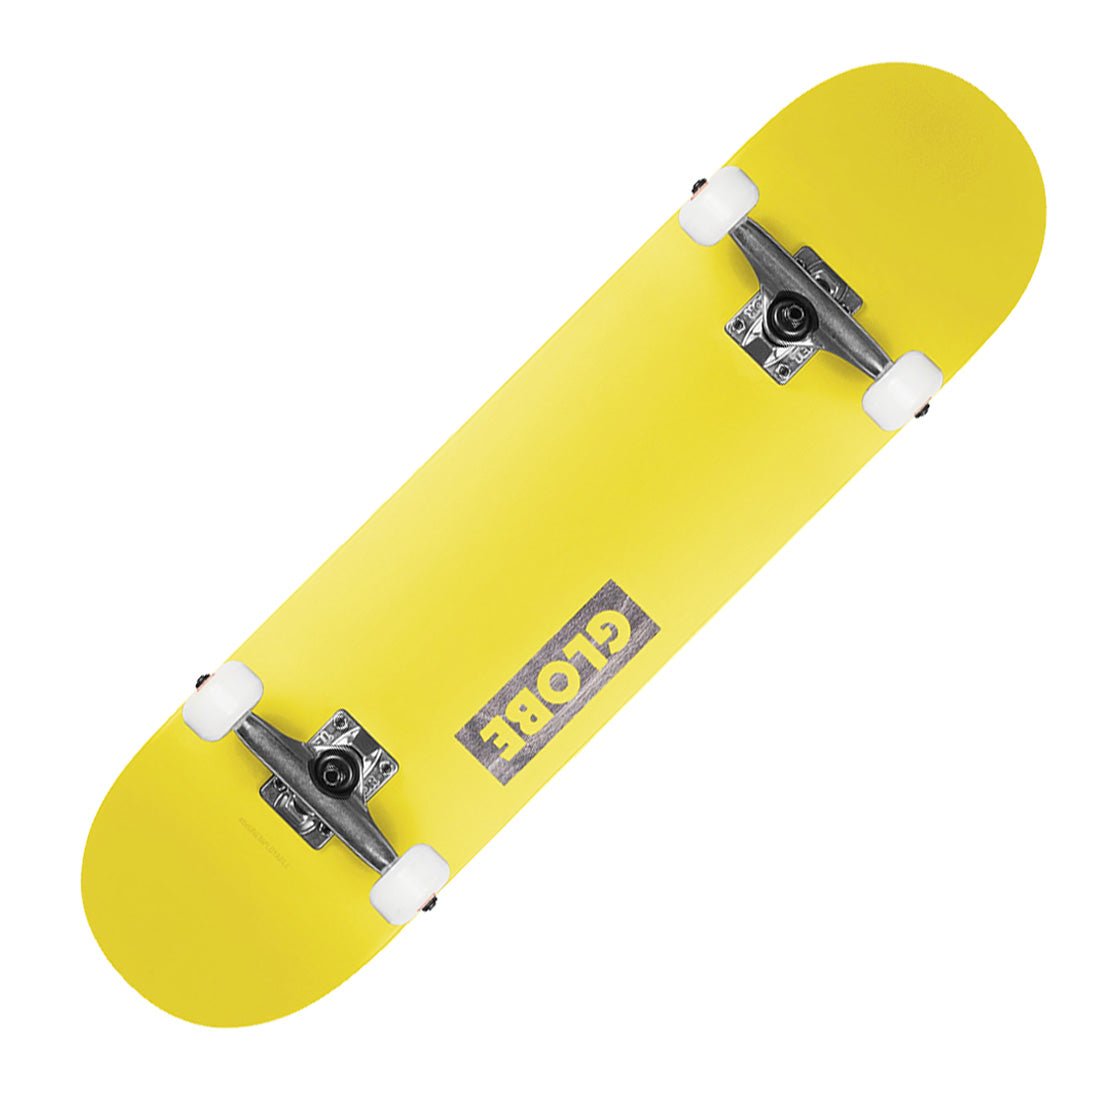 Globe Goodstock 7.75 Complete - Yellow Skateboard Completes Modern Street